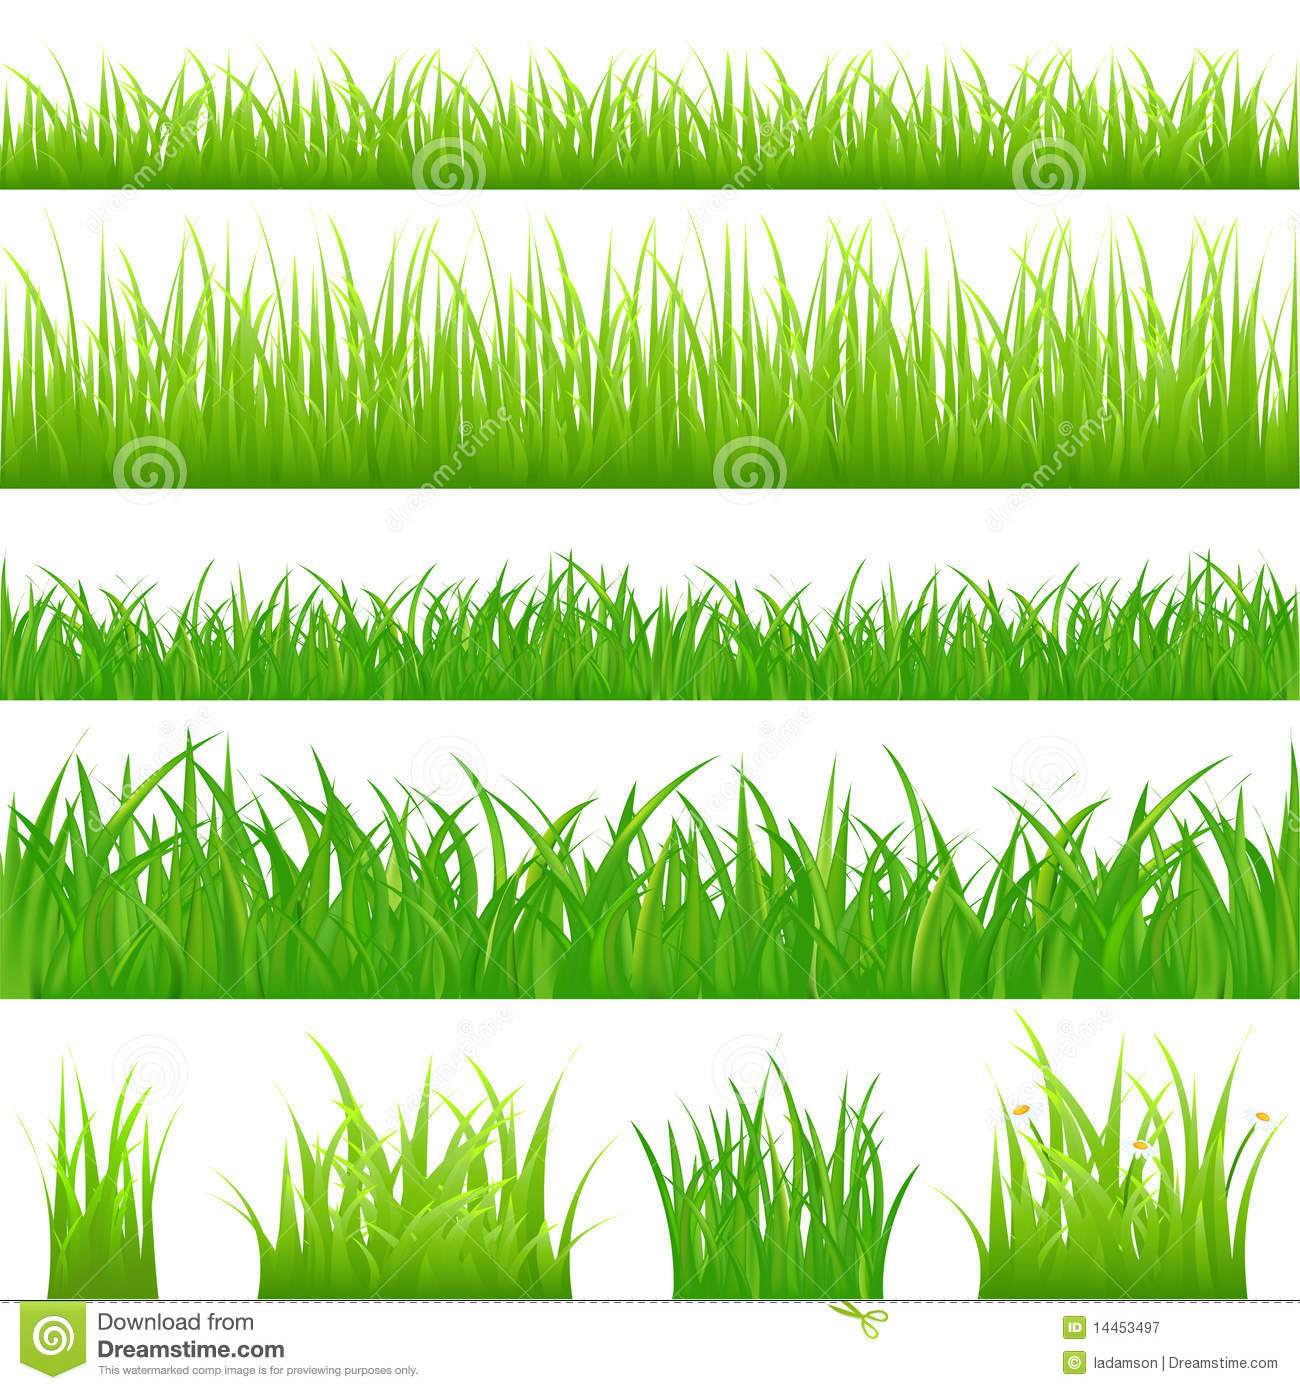 Free Vector Grass